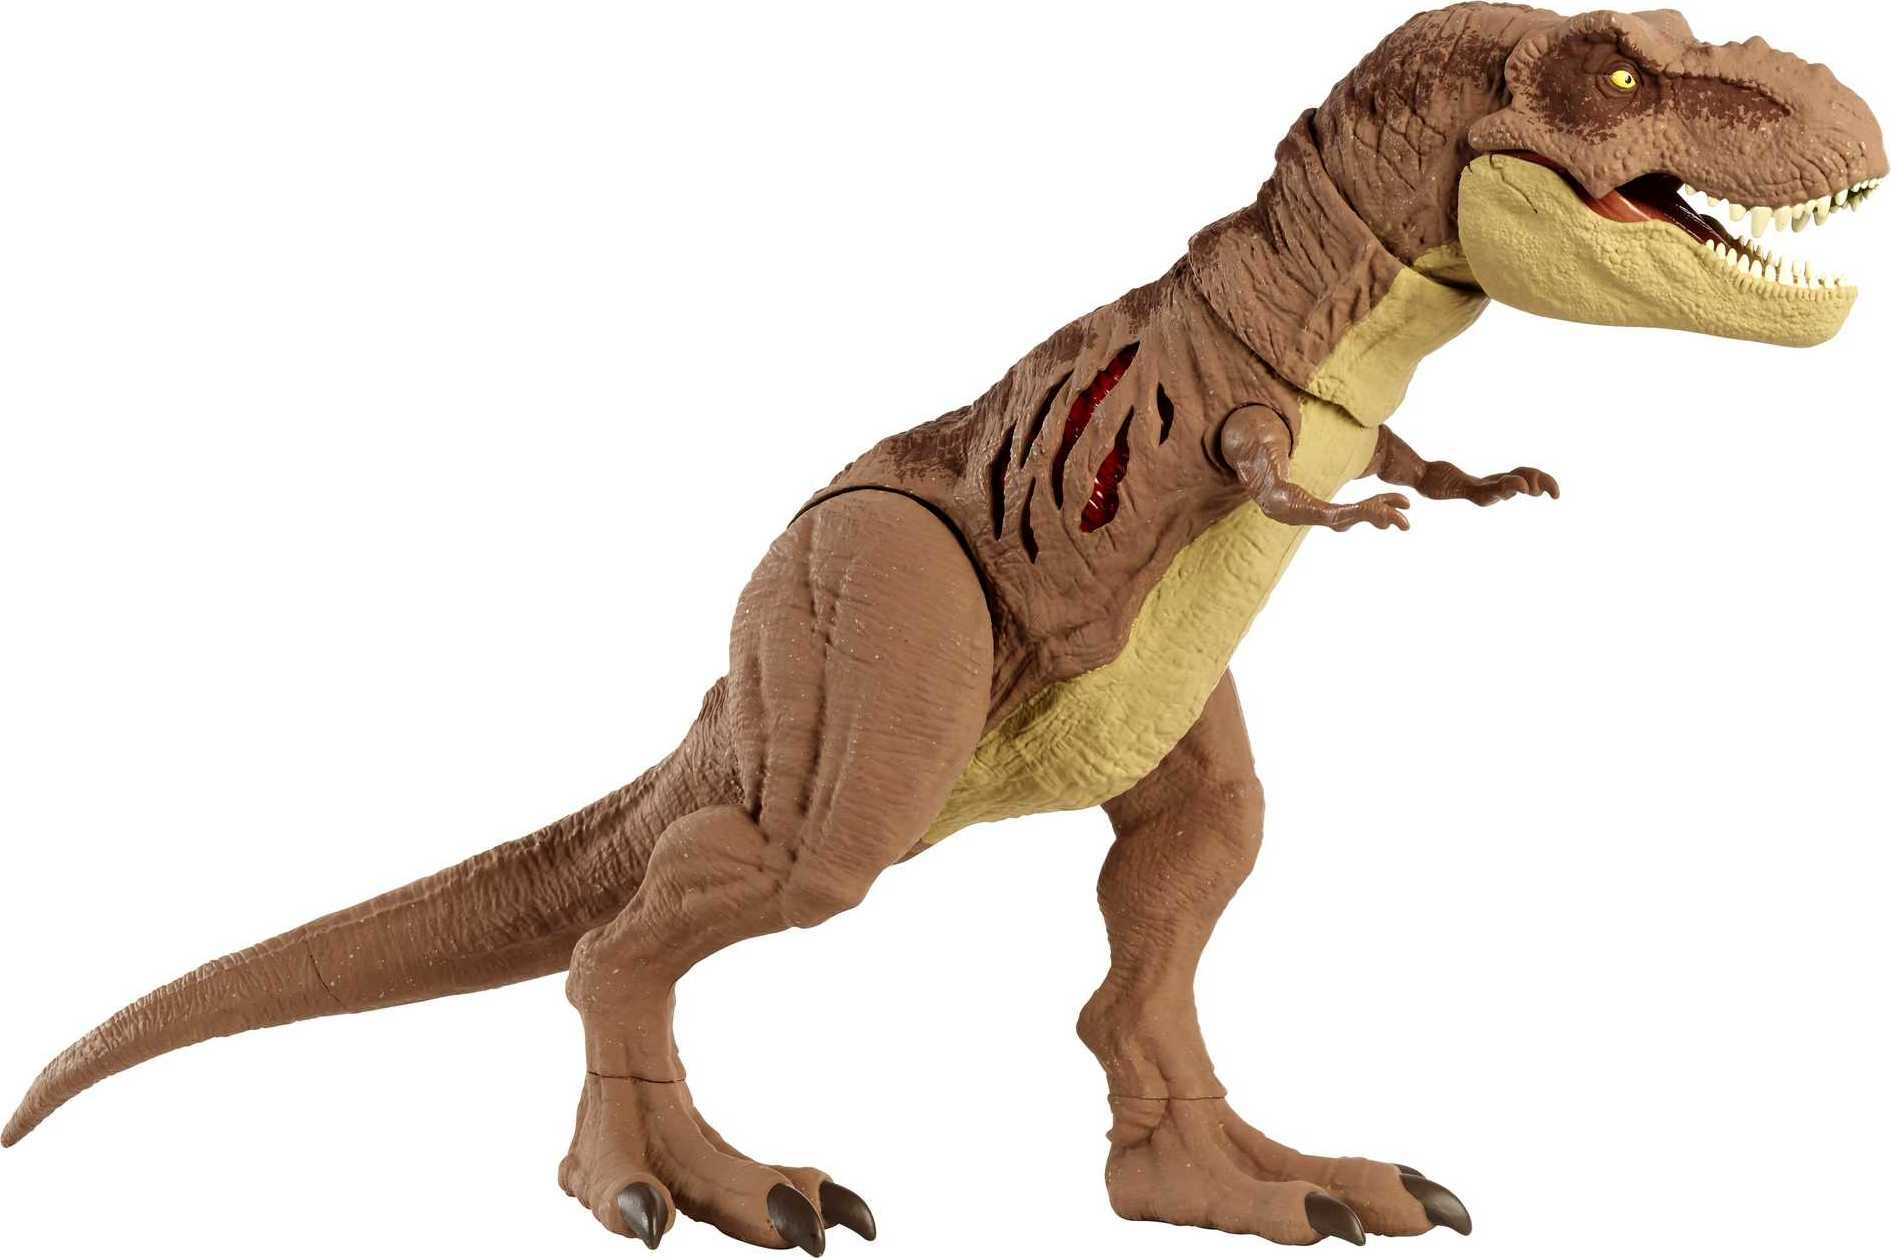 Jurassic World Extreme Damage Tyrannosaurus Rex Action Figure, Transforming Dinosaur Toy with Motion - image 1 of 6